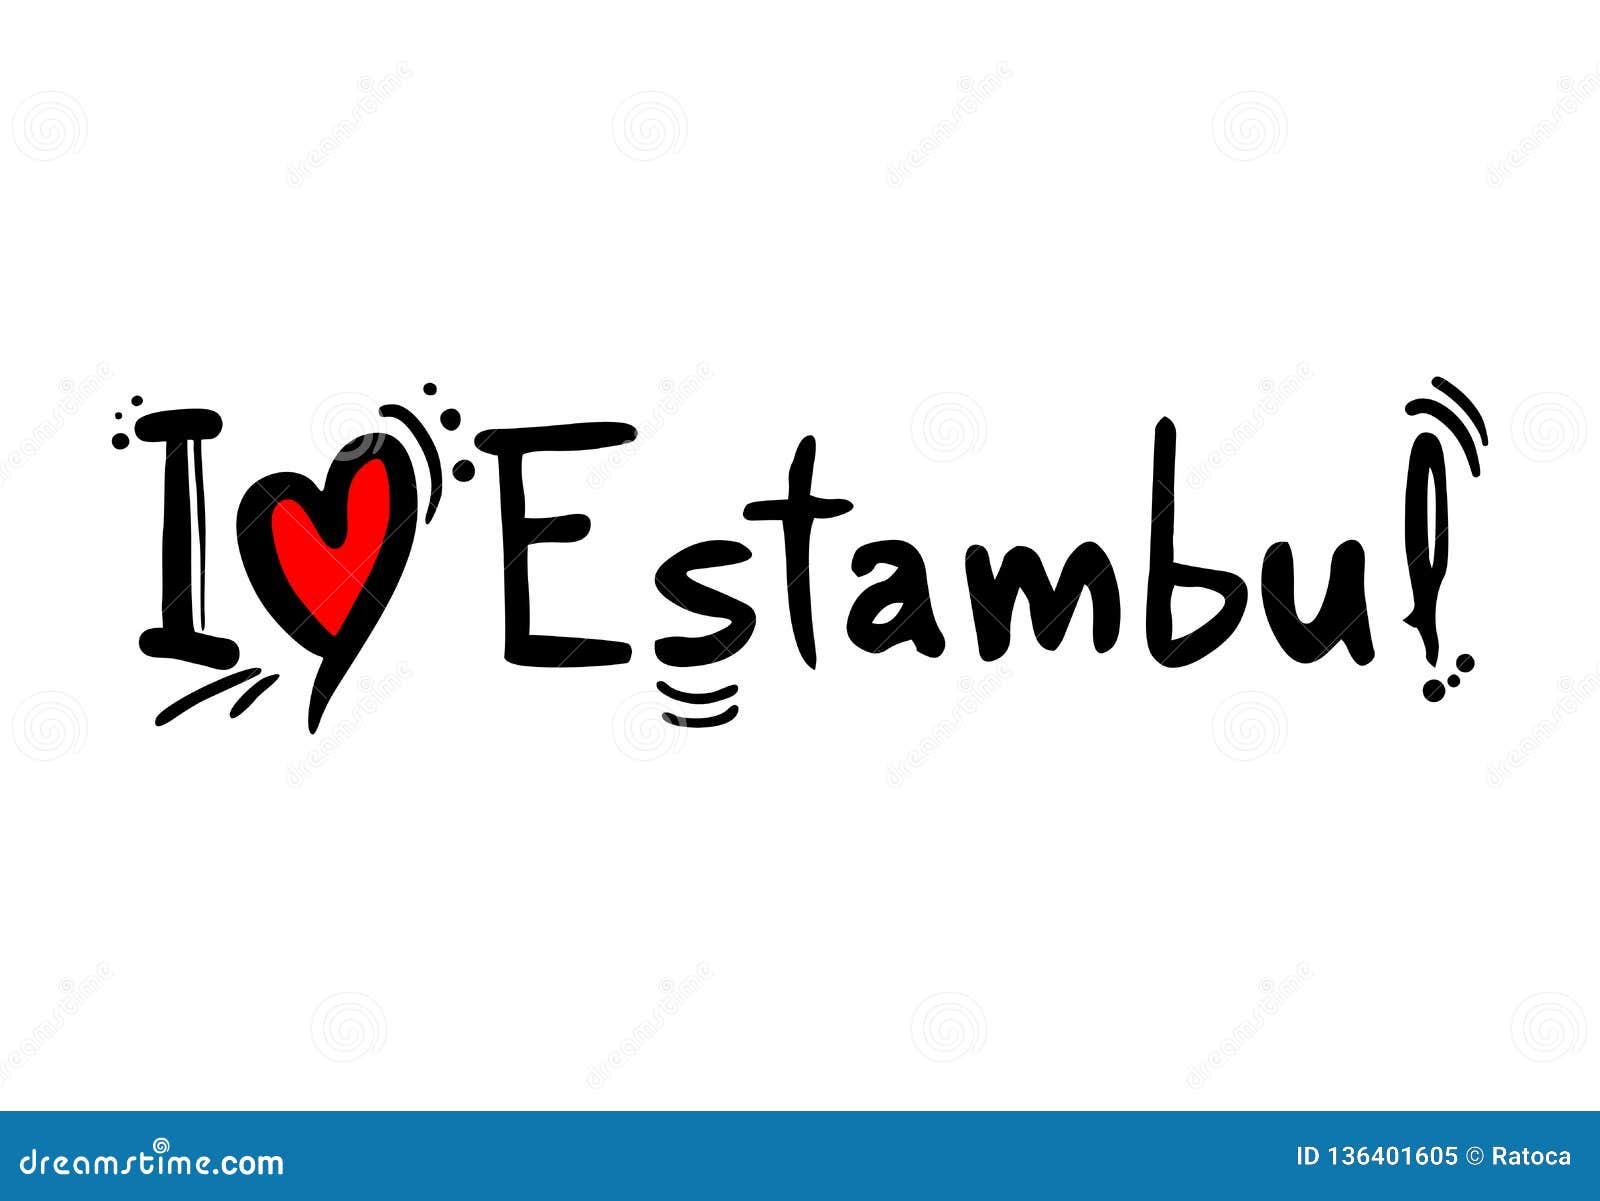 estambul city of turkey